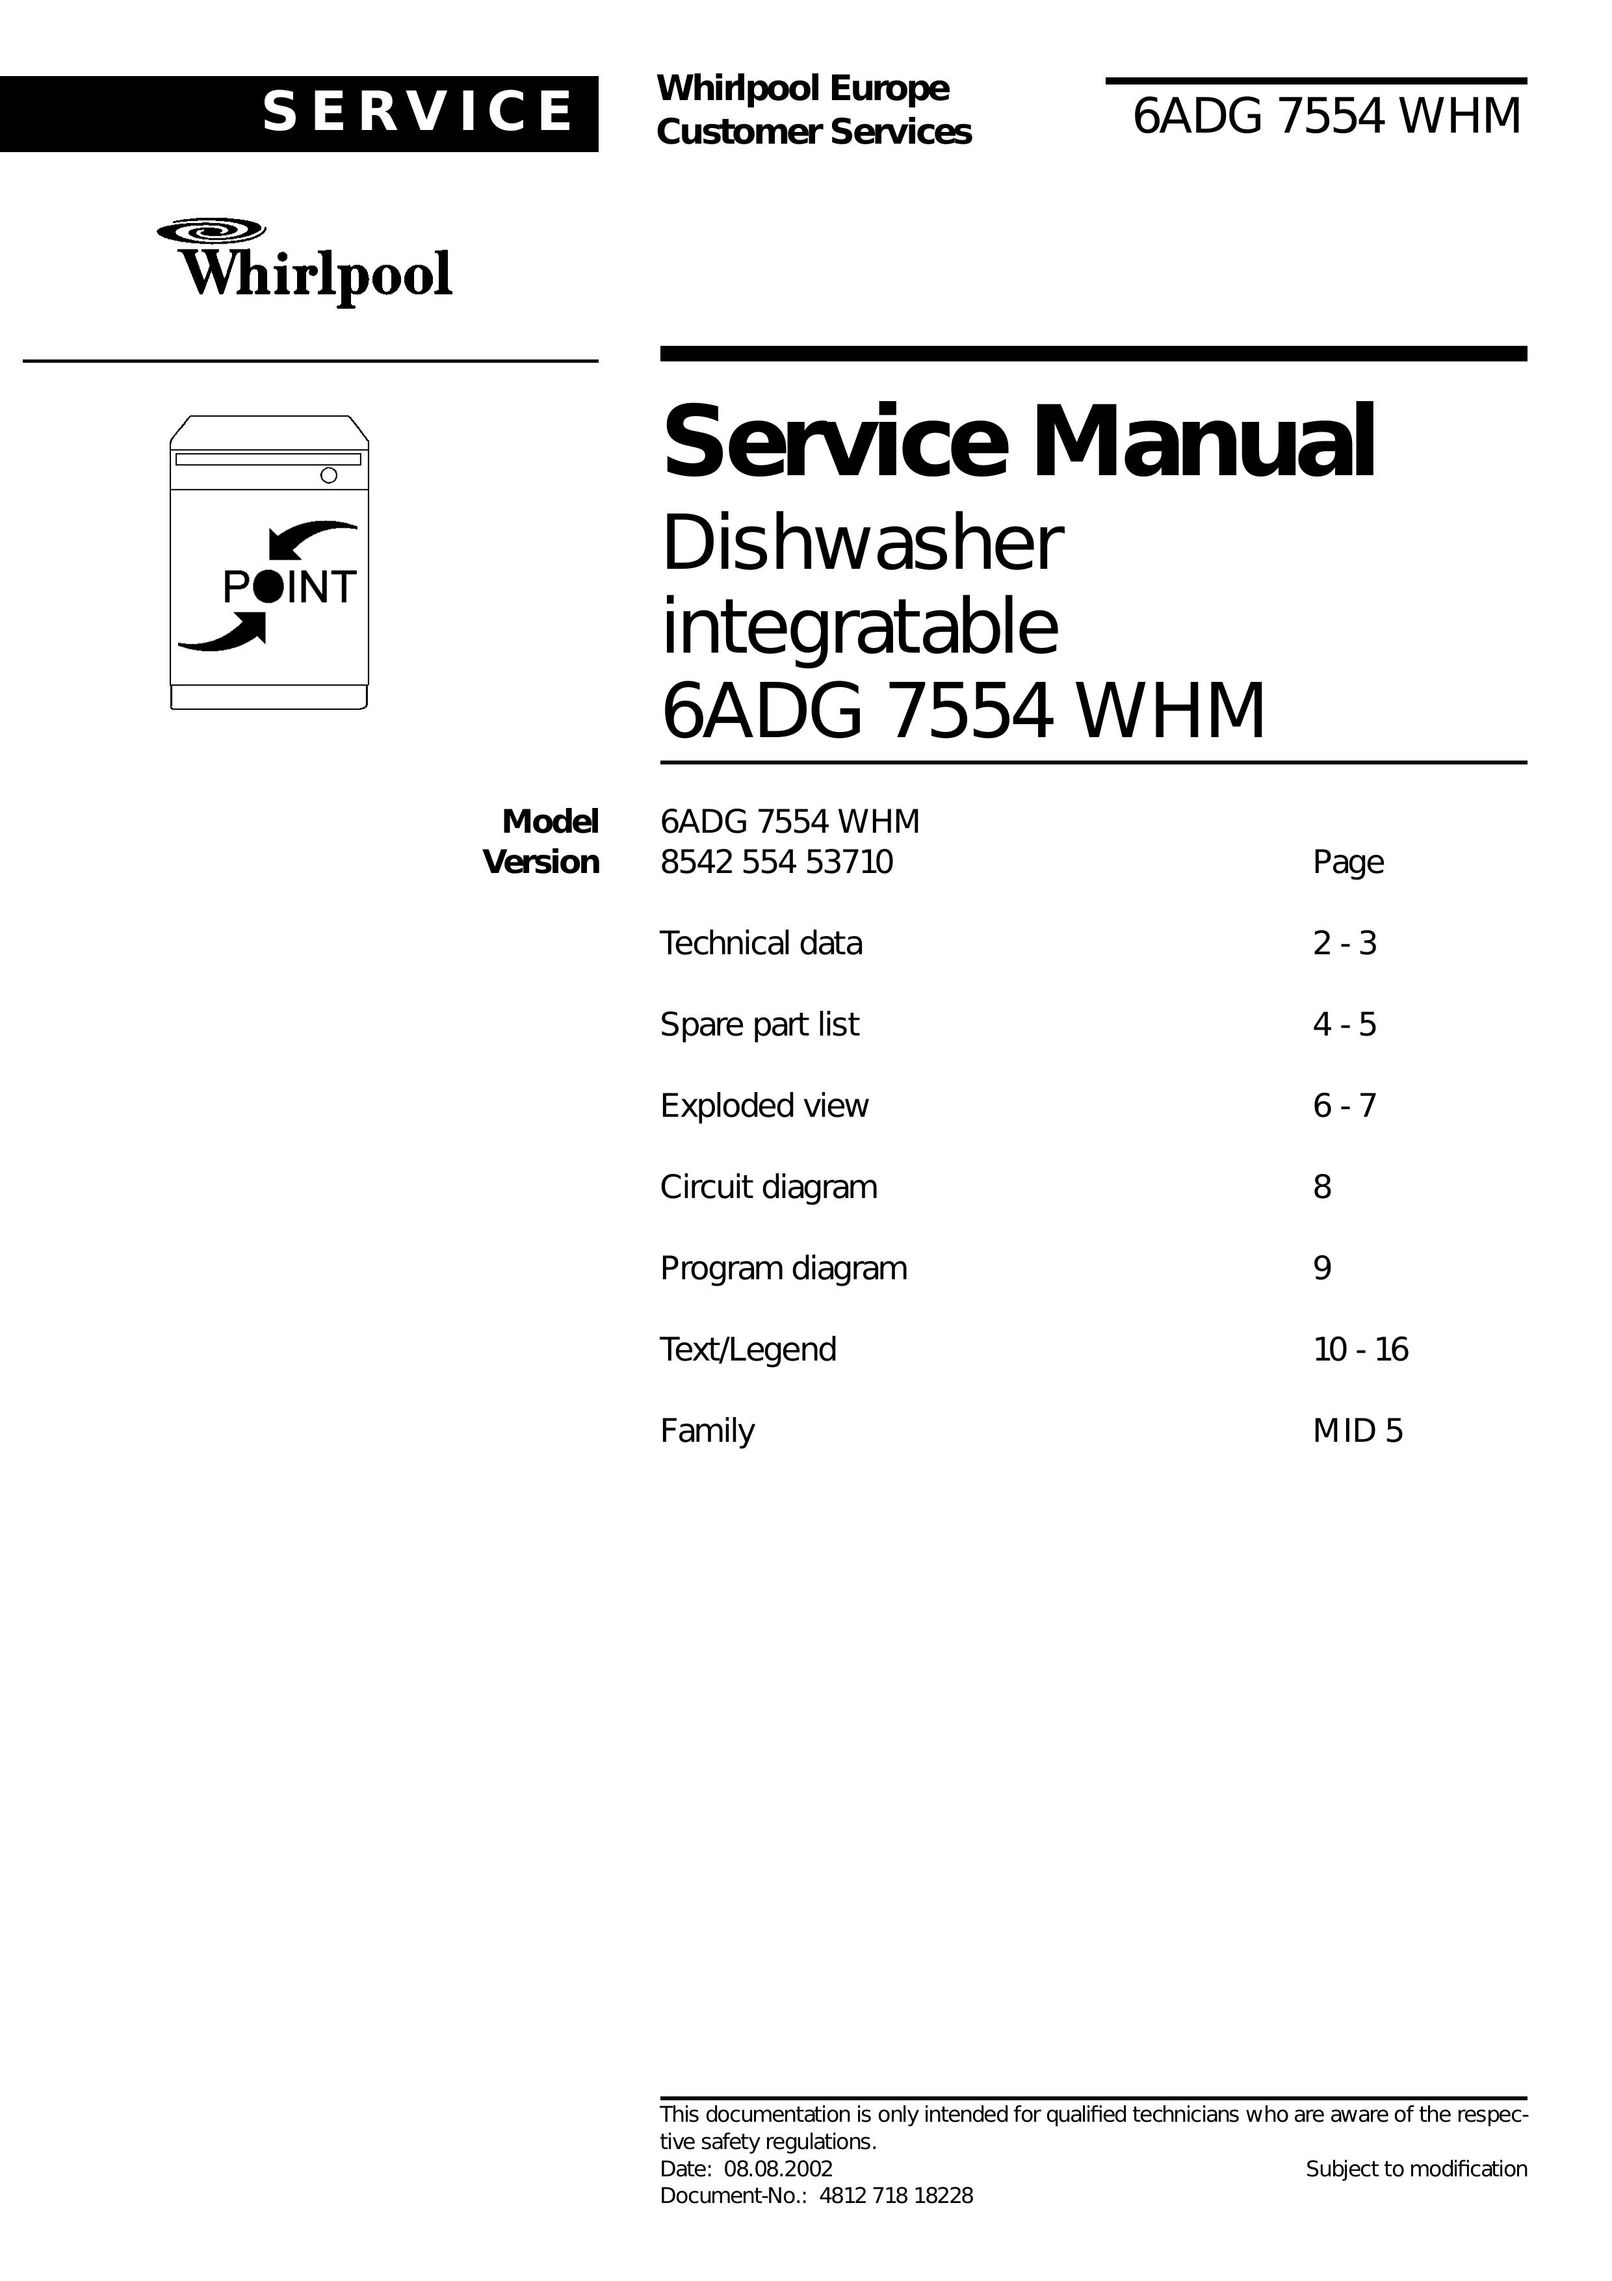 Whirlpool 6ADG 7554 WHM Dishwasher User Manual